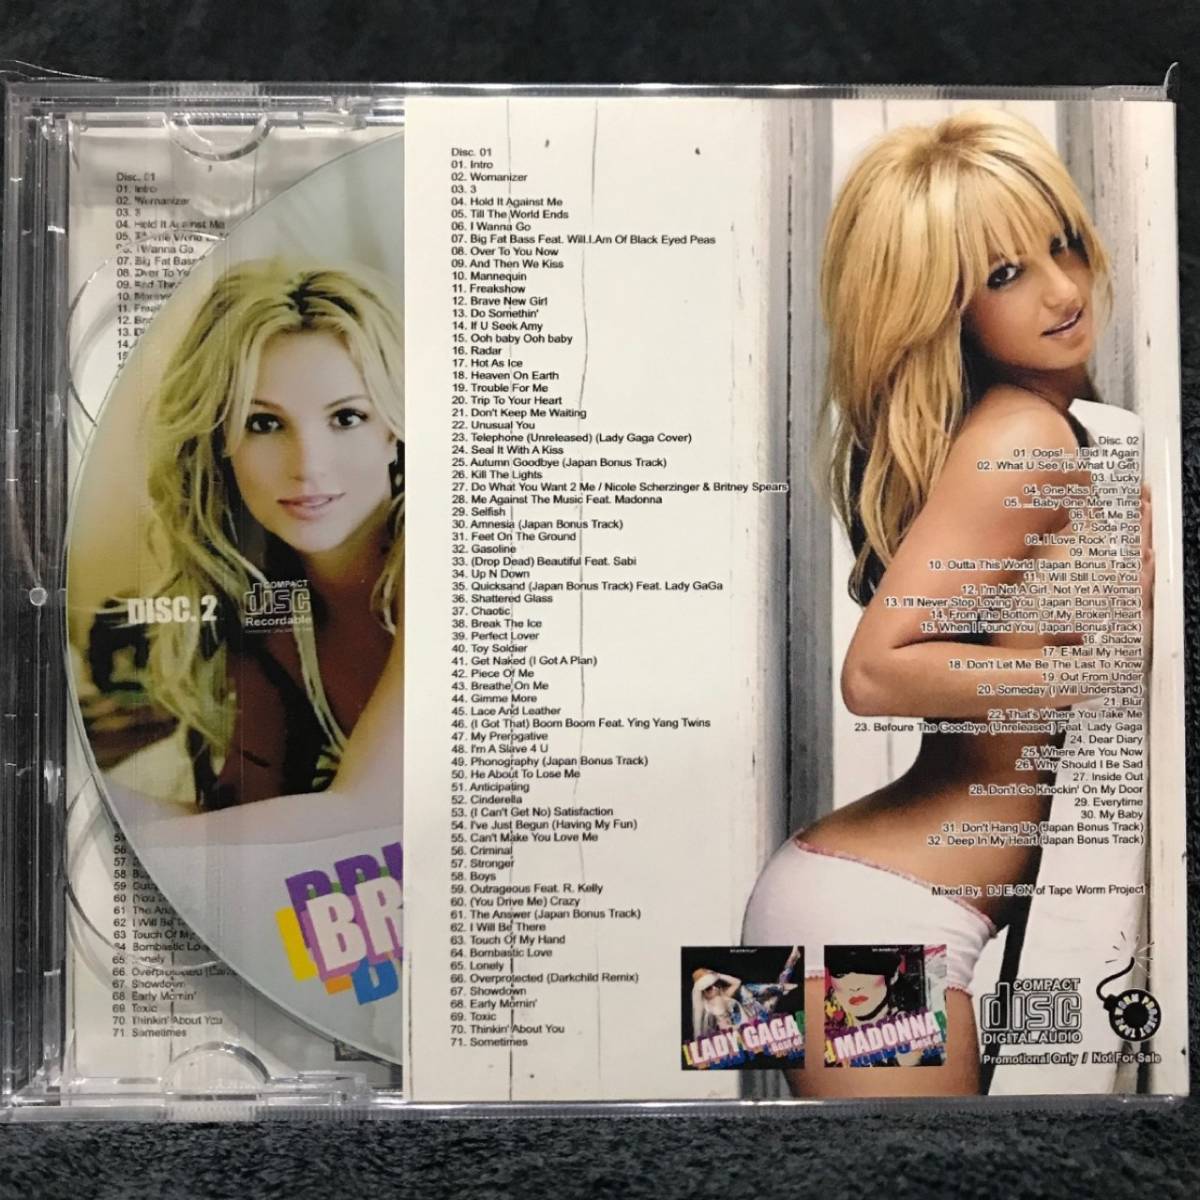 Britney Spears ブリトニースピアーズ 豪華2枚組104曲 完全網羅 メガミックス Best Mega  MixCD【2,210円→在庫処分セール】匿名配送料込